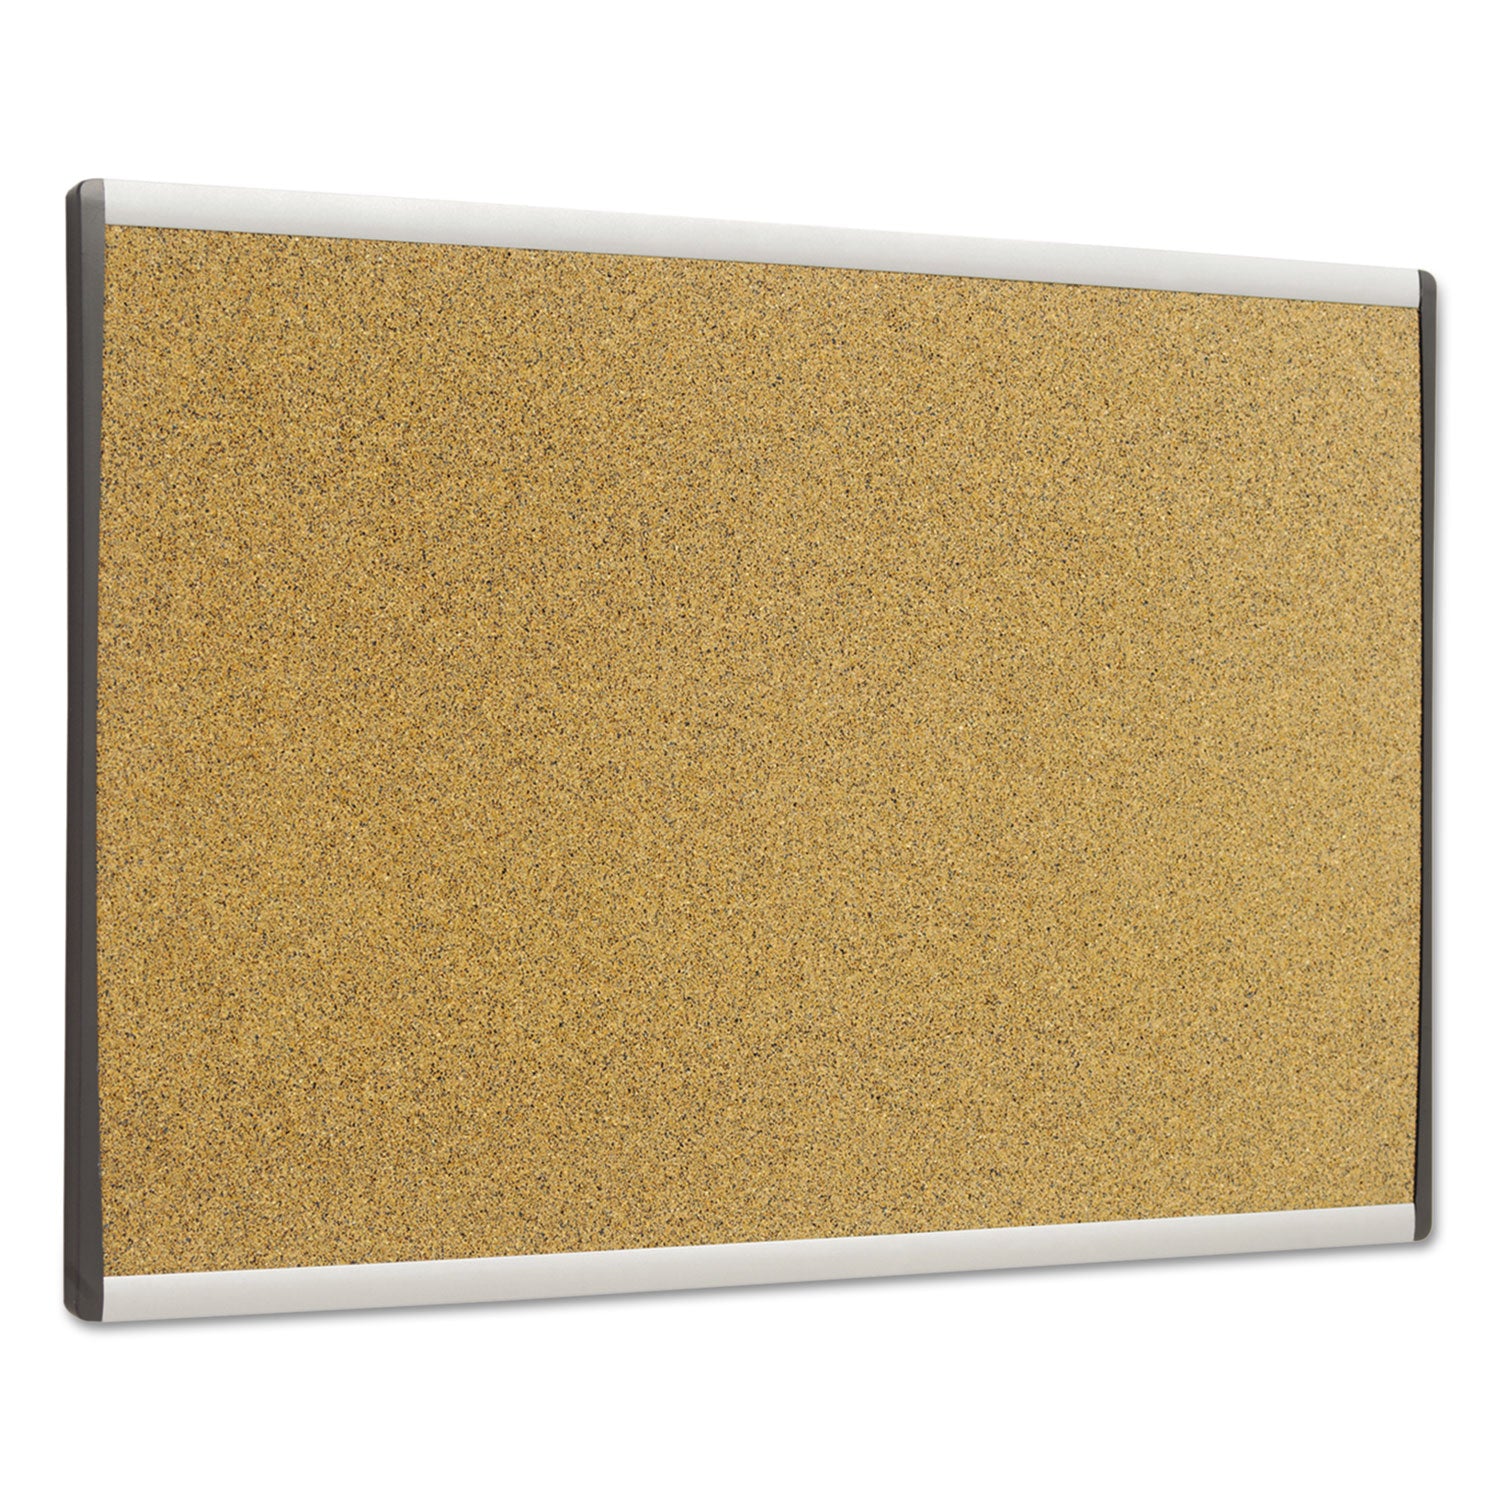 ARC Frame Cubicle Cork Board, 24 x 14, Tan Surface, Silver Aluminum Frame - 